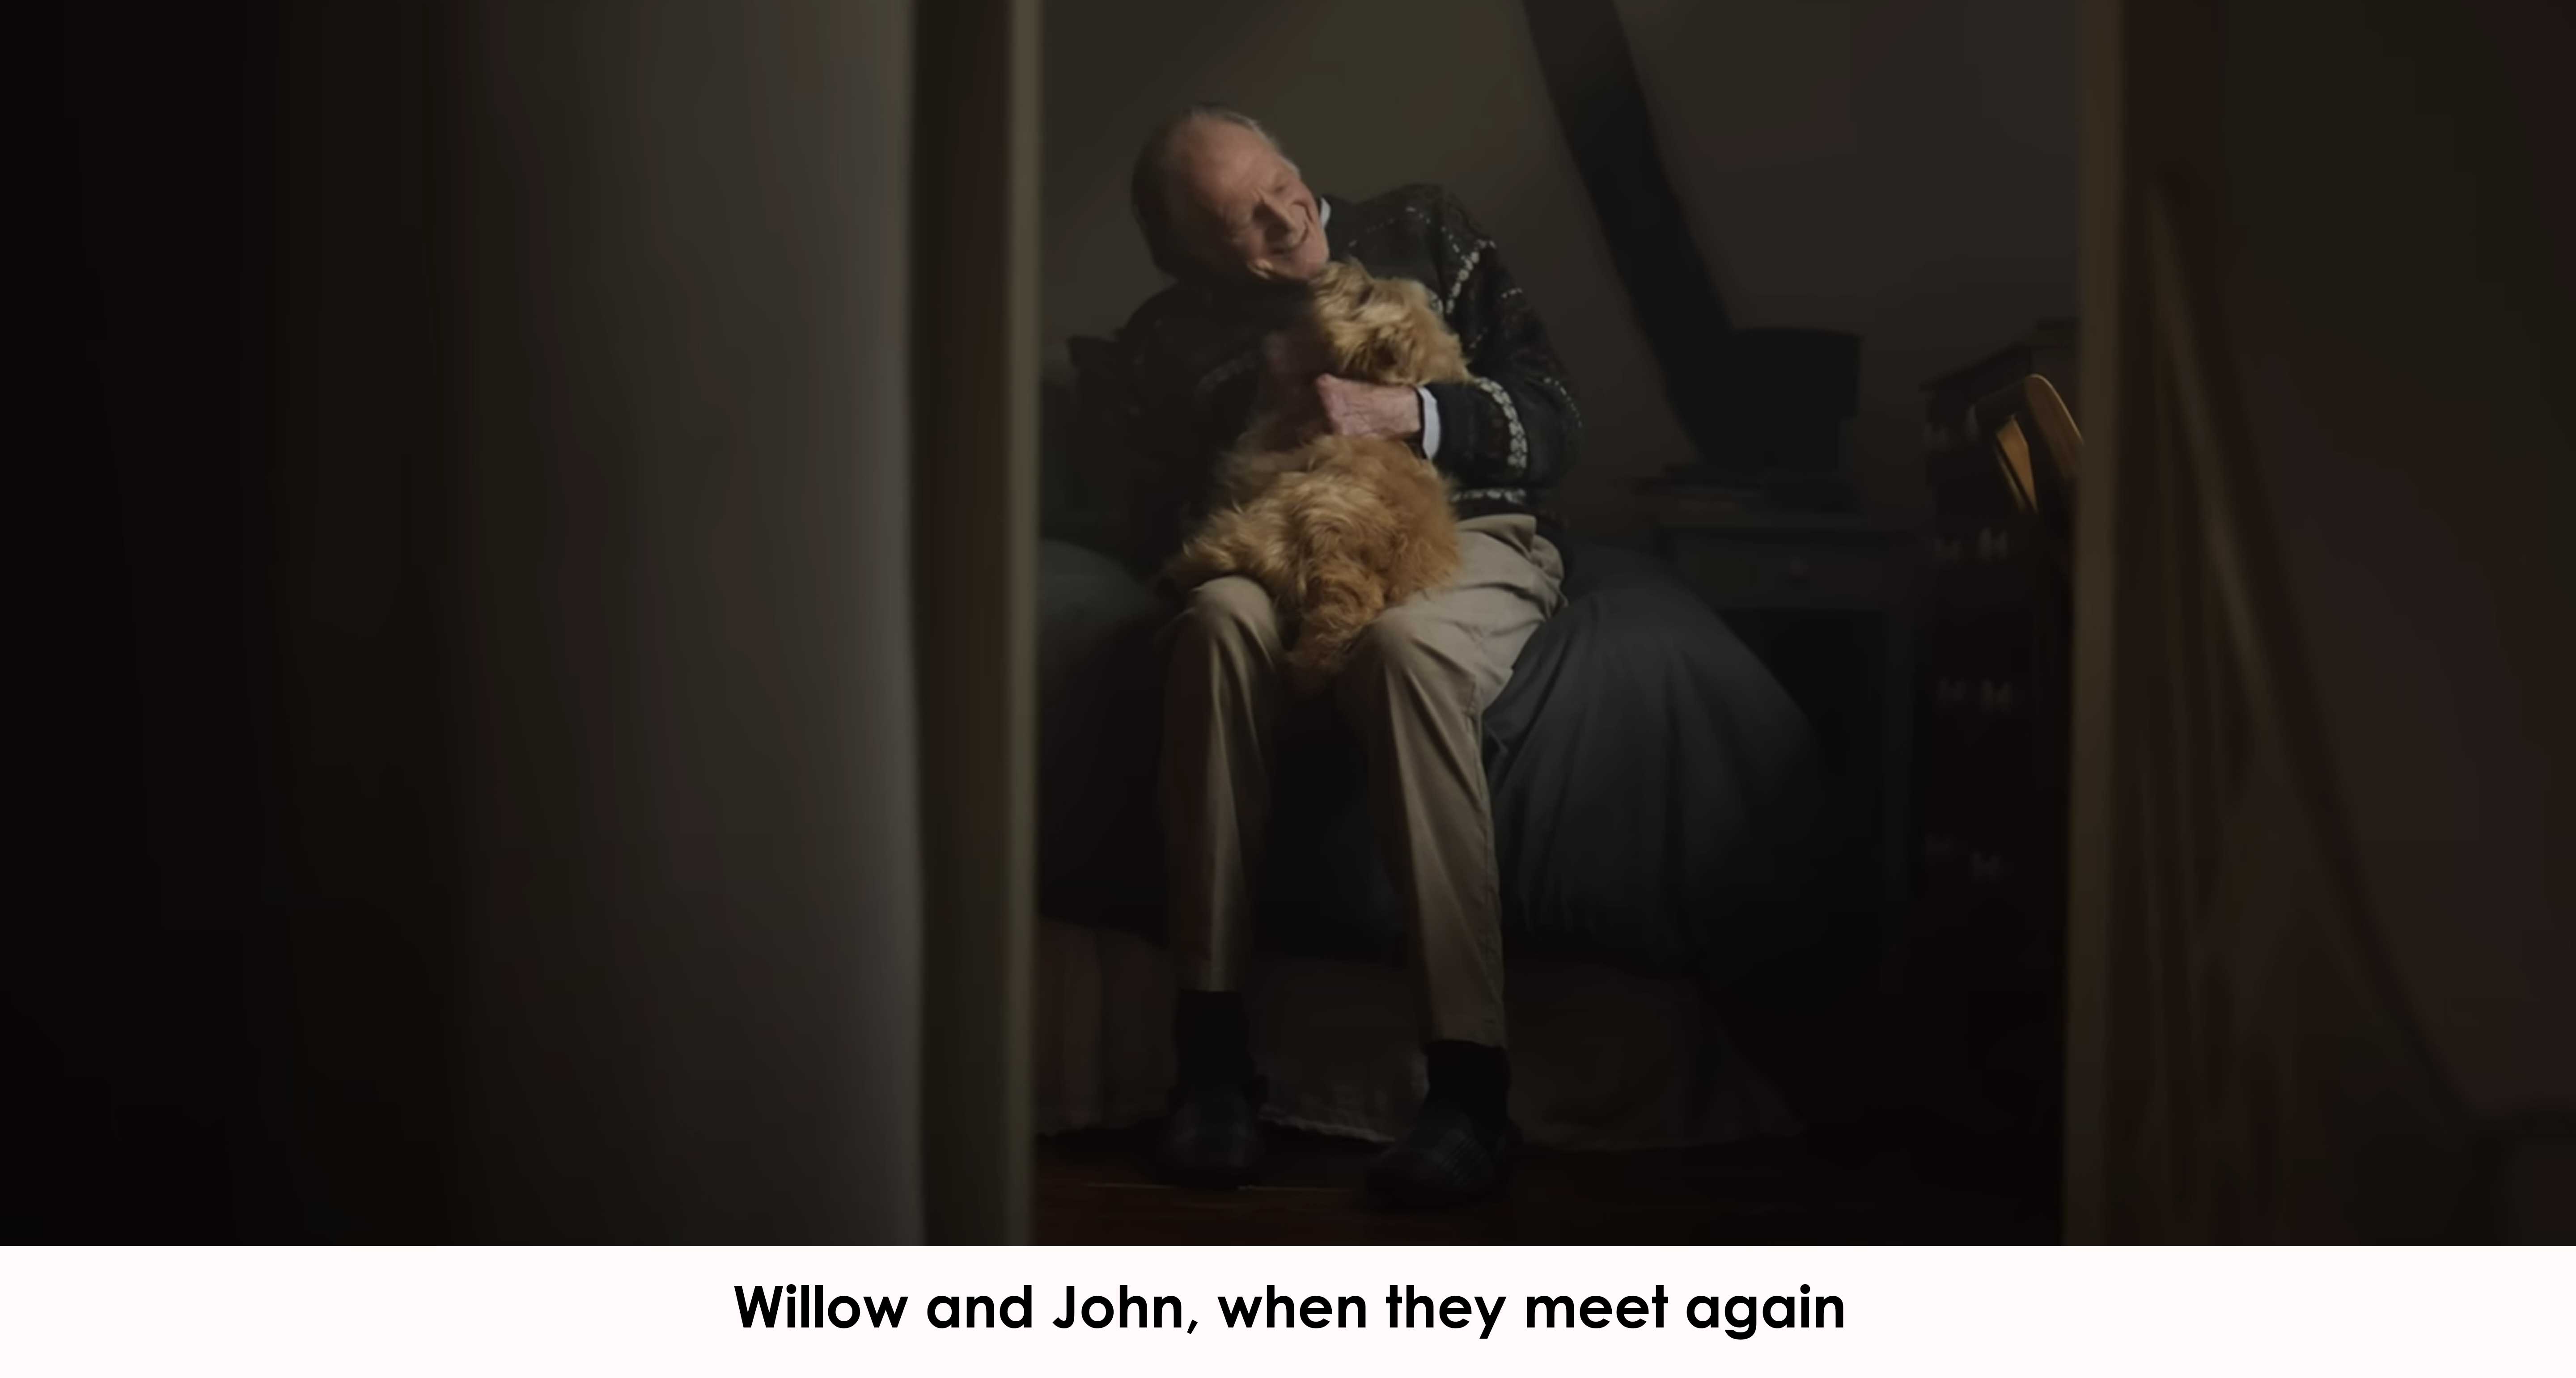 Winnie, the Cairn Terrier, reunited with her friend John